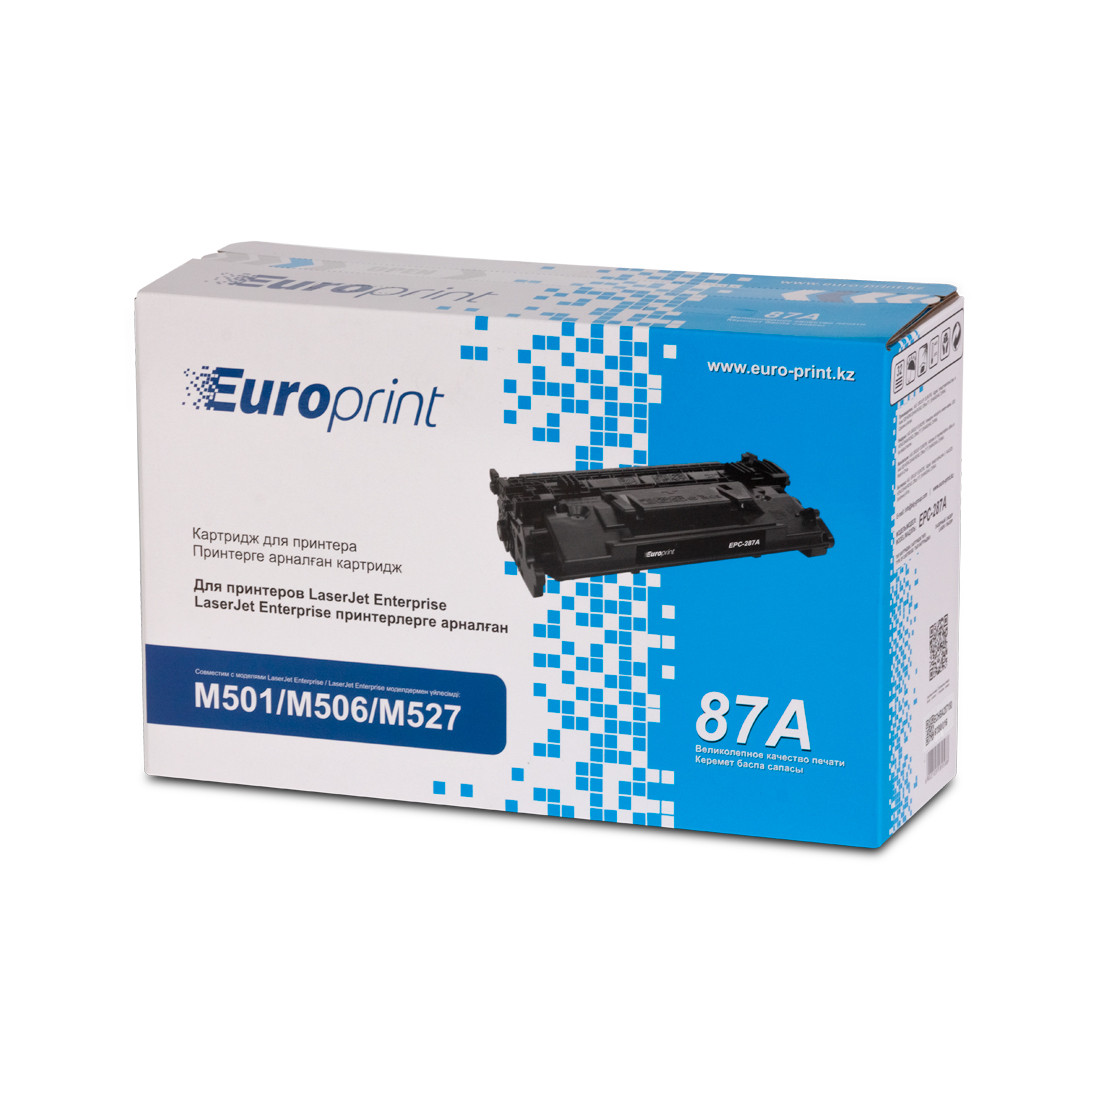 Картридж, Europrint, EPC-287A, Для принтеров HP LaserJet Enterprise M501/M506/M527, 9000 страниц.